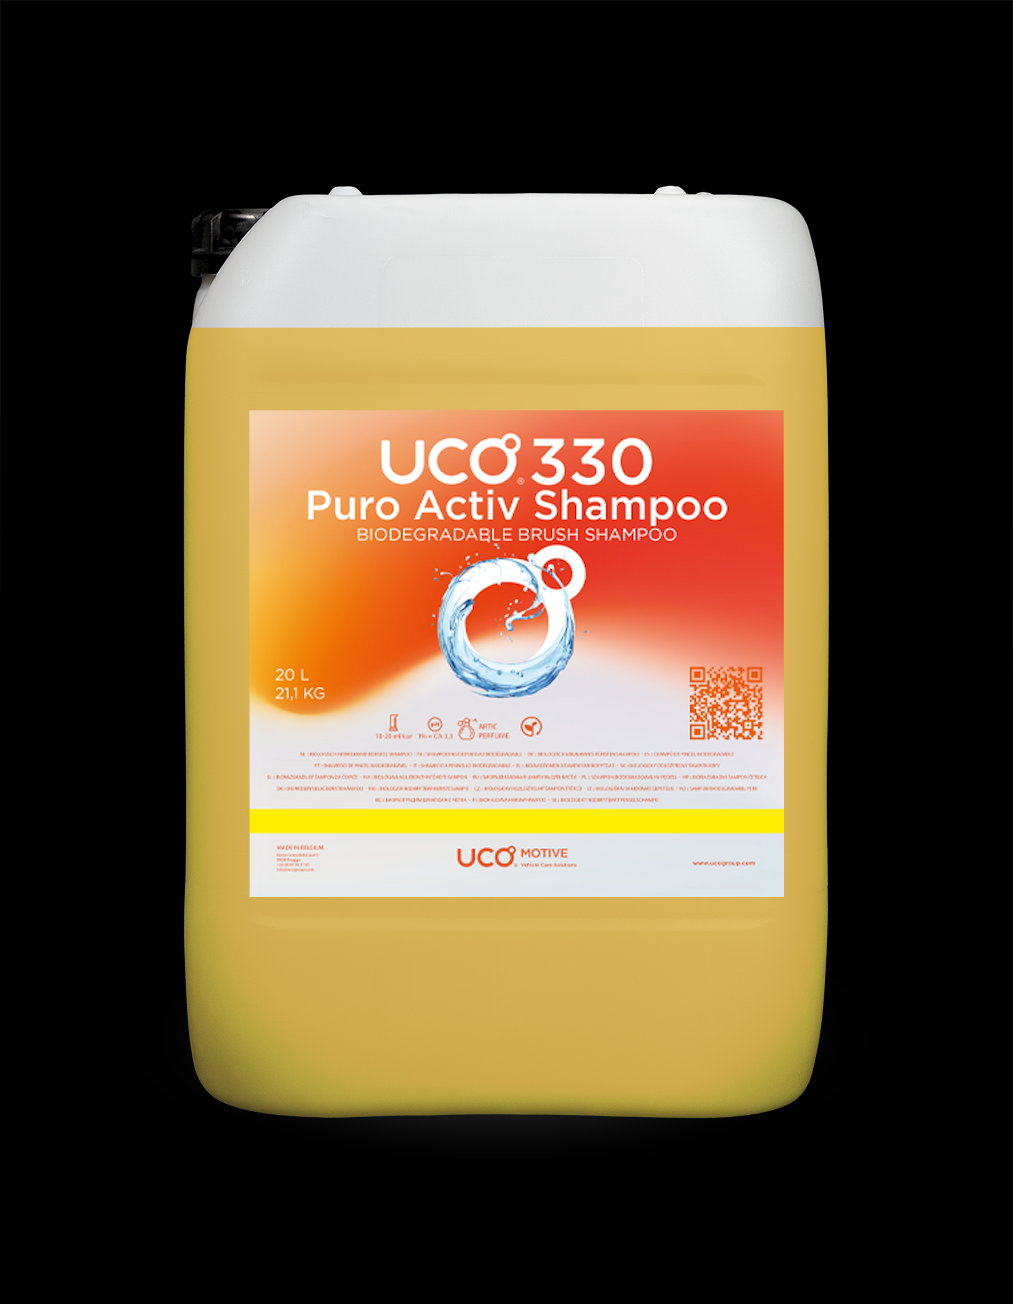 UCO330 Puro Activ Shampoo